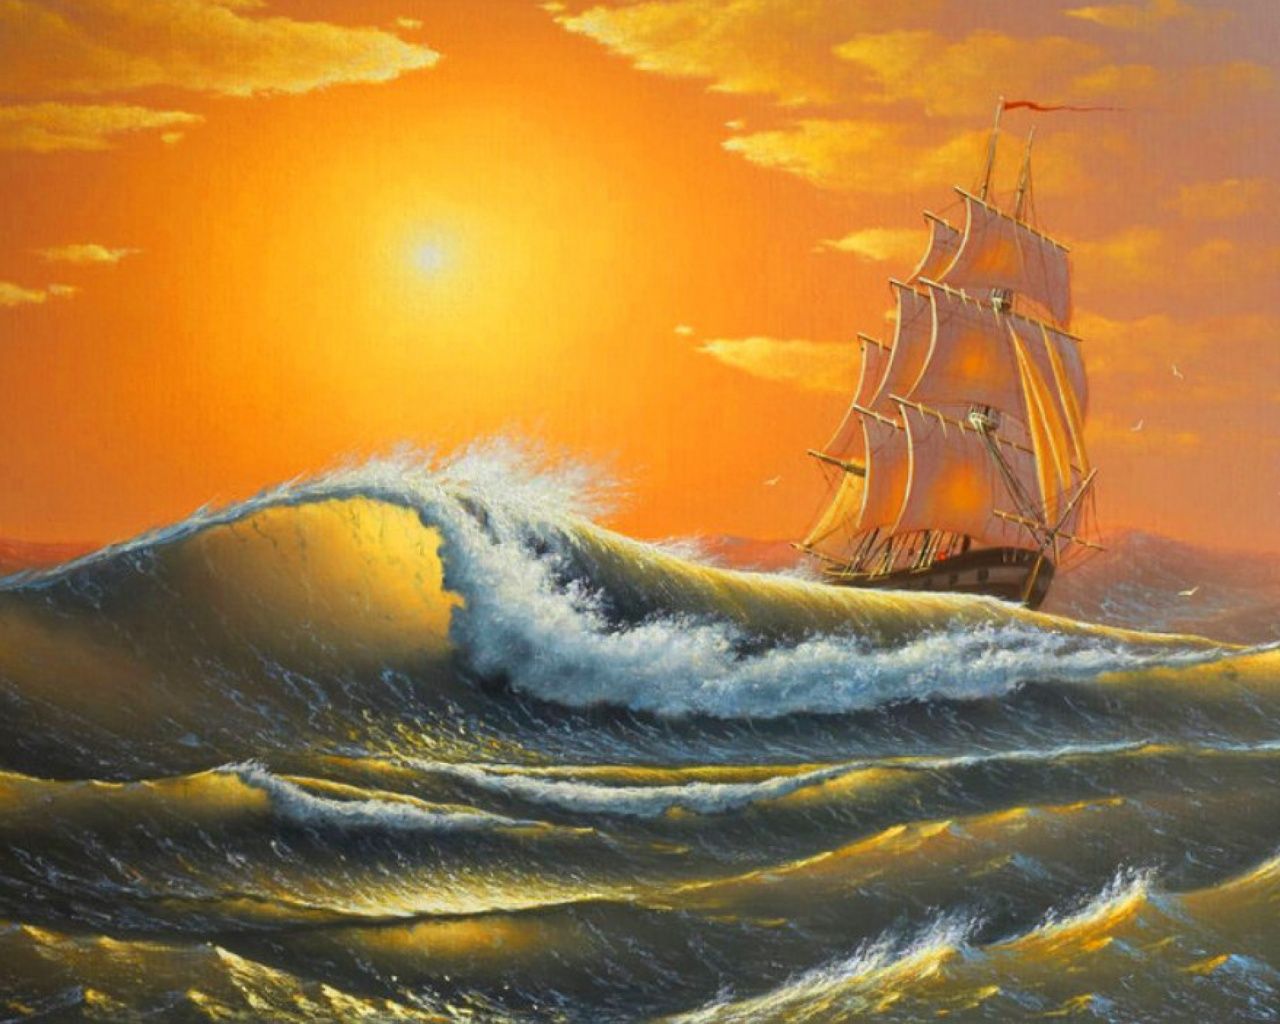 Wild Ocean Ship Orange Sunset wallpaper. Wild Ocean Ship Orange Sunset